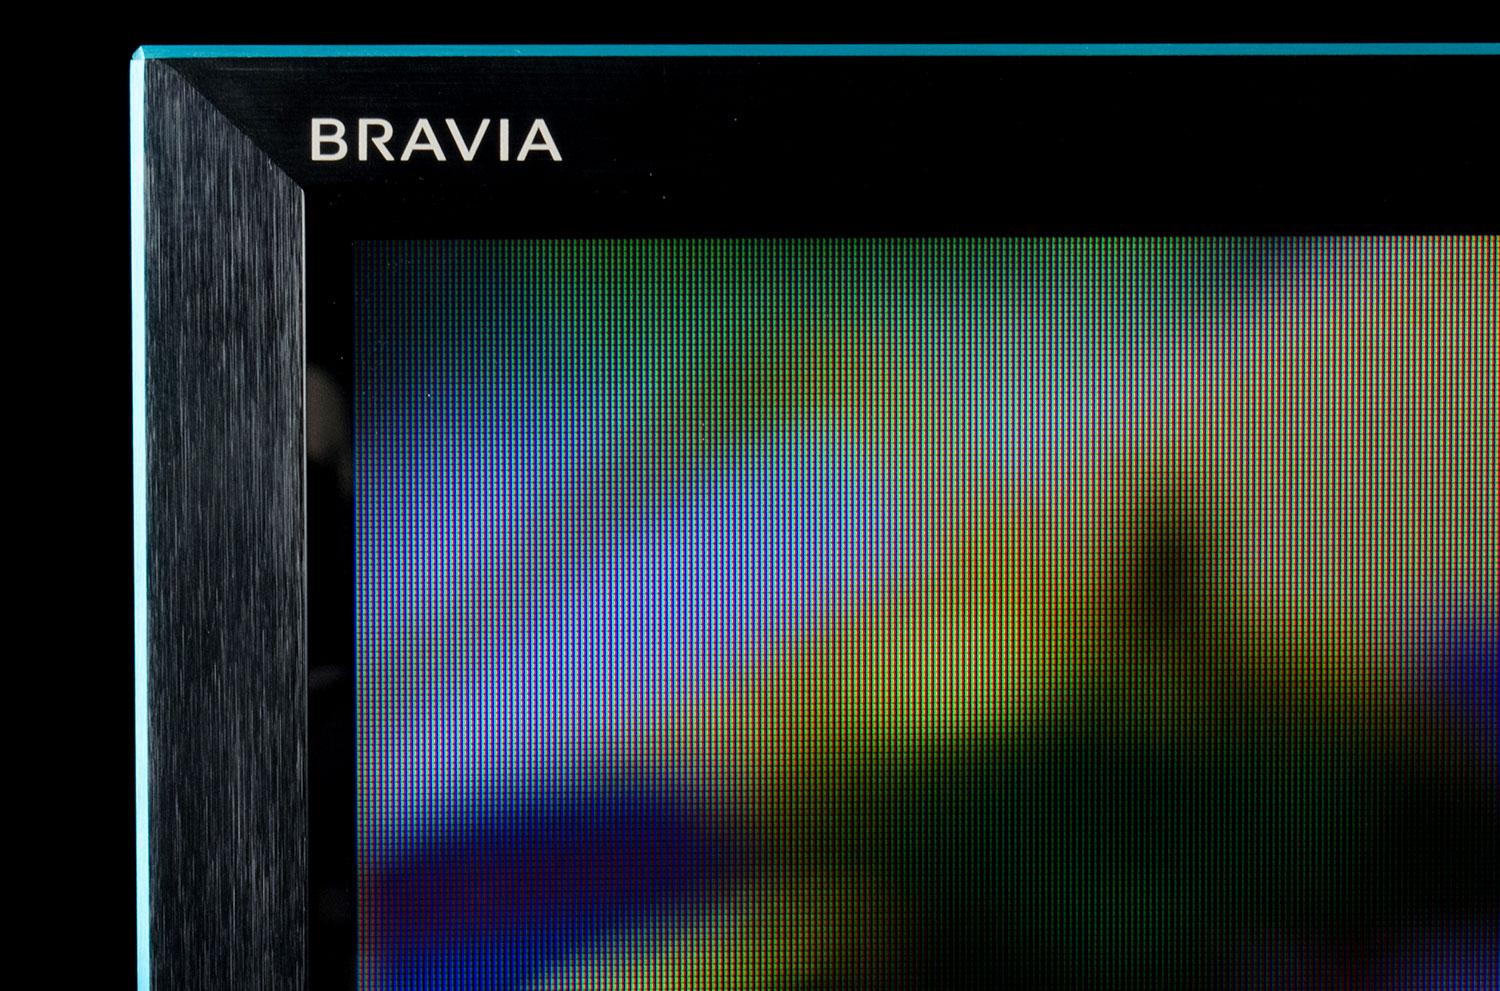 Sony Bravia KDL-47W802A Review | Digital Trends